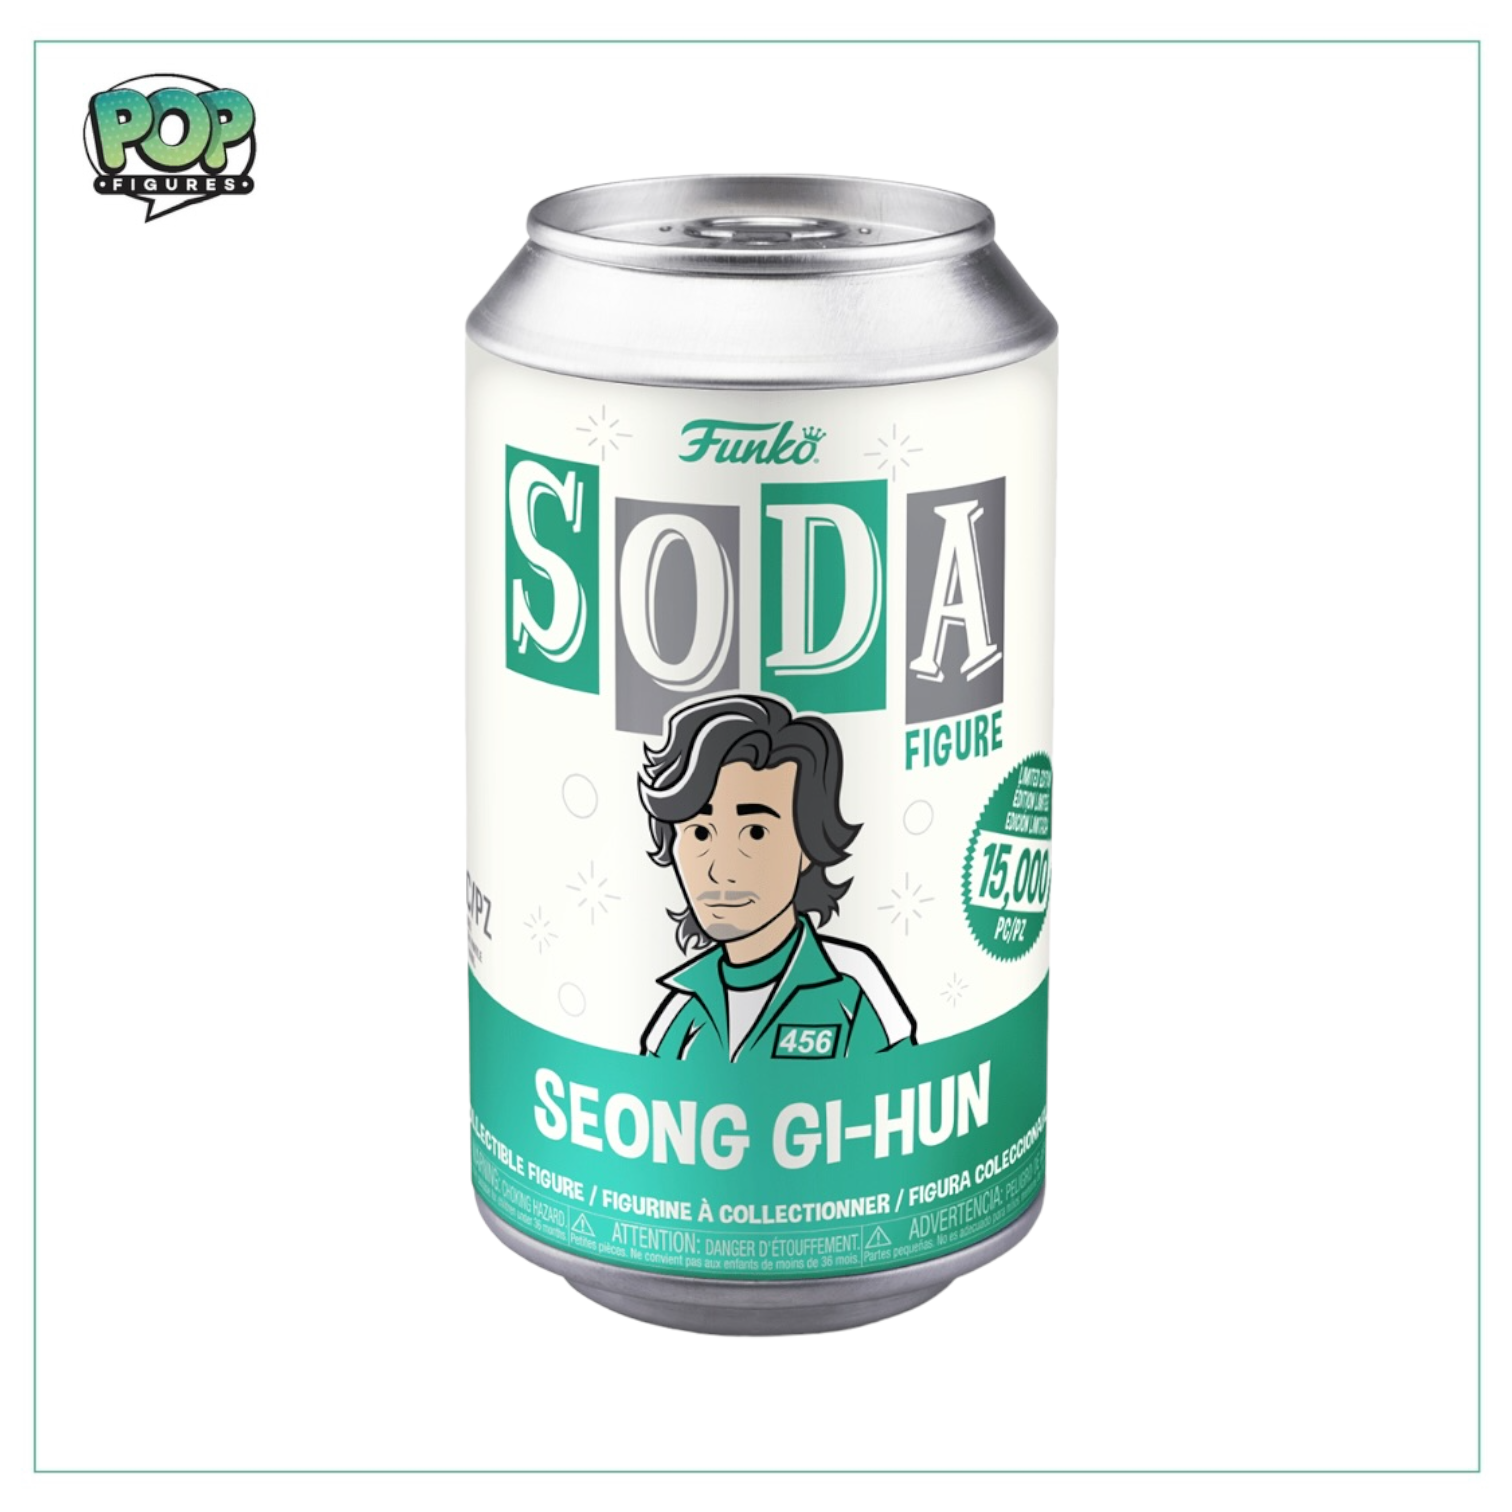 Seong Gi-Hun Funko Soda Vinyl Figure! - Squid Game - LE15000 Pcs - Chance Of Chase